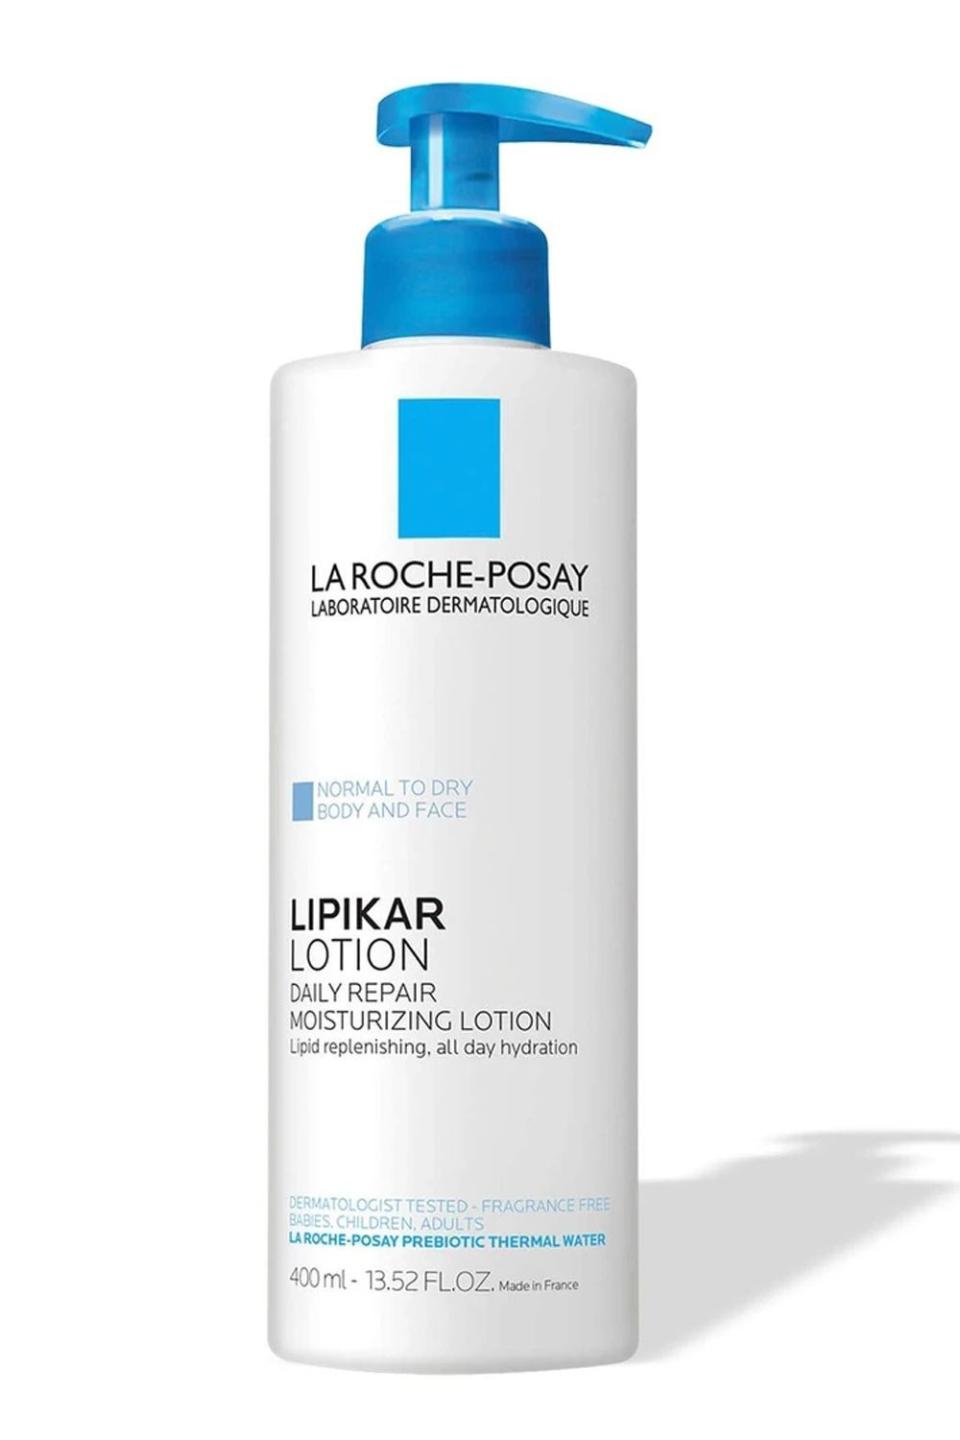 10) La Roche-Posay Lipikar Body Lotion for Normal to Dry Skin